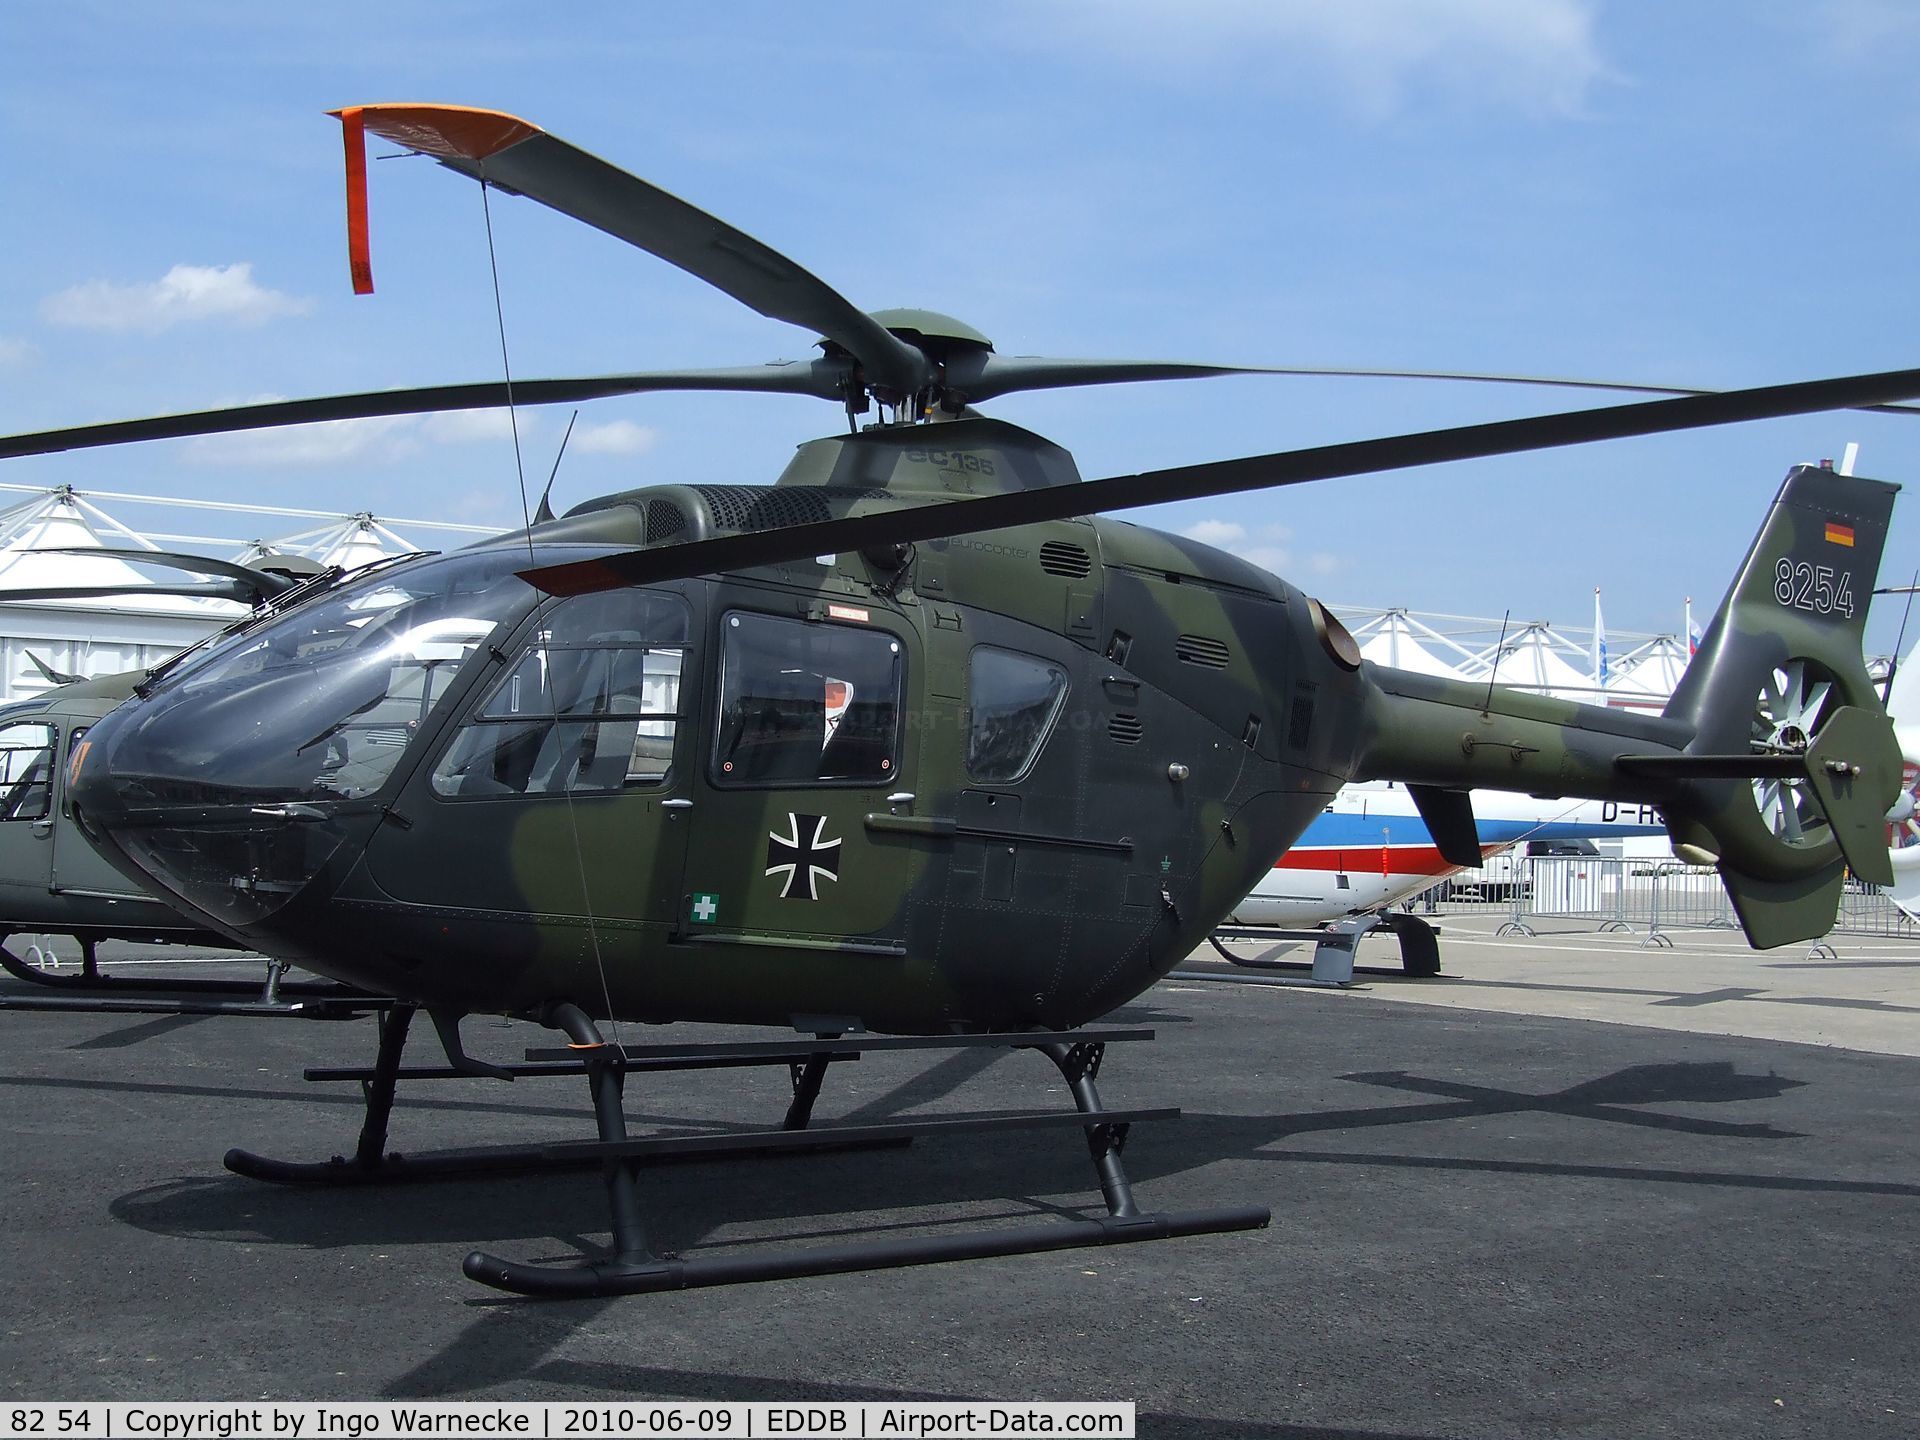 82 54, 1995 Eurocopter EC-135T-1 C/N 0099, Eurocopter EC135T-1 of German army aviation (Heeresflieger) at ILA 2010, Berlin